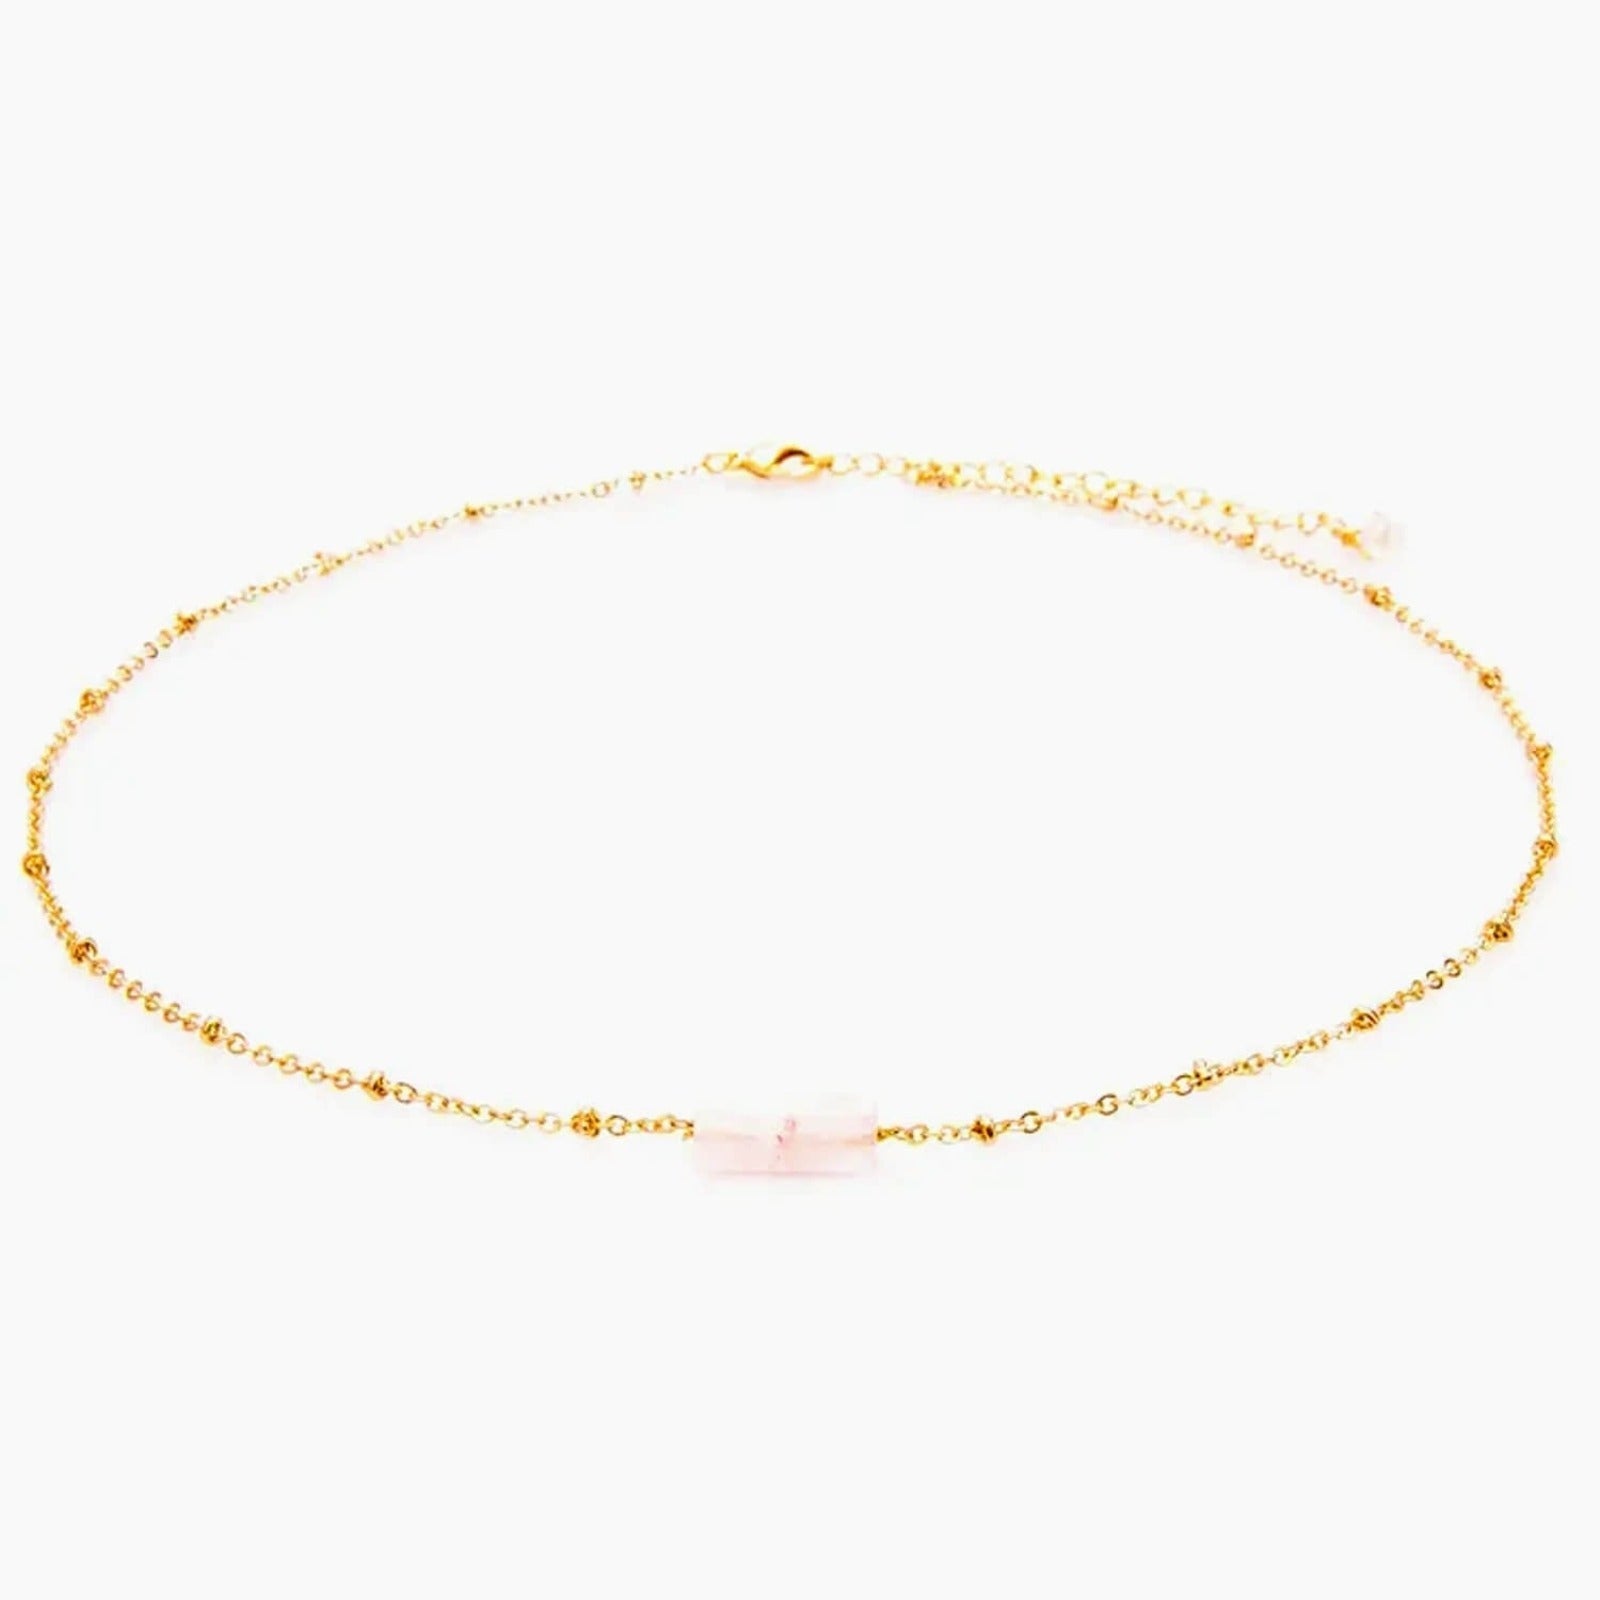 raw rose quartz gold necklace for healing energy